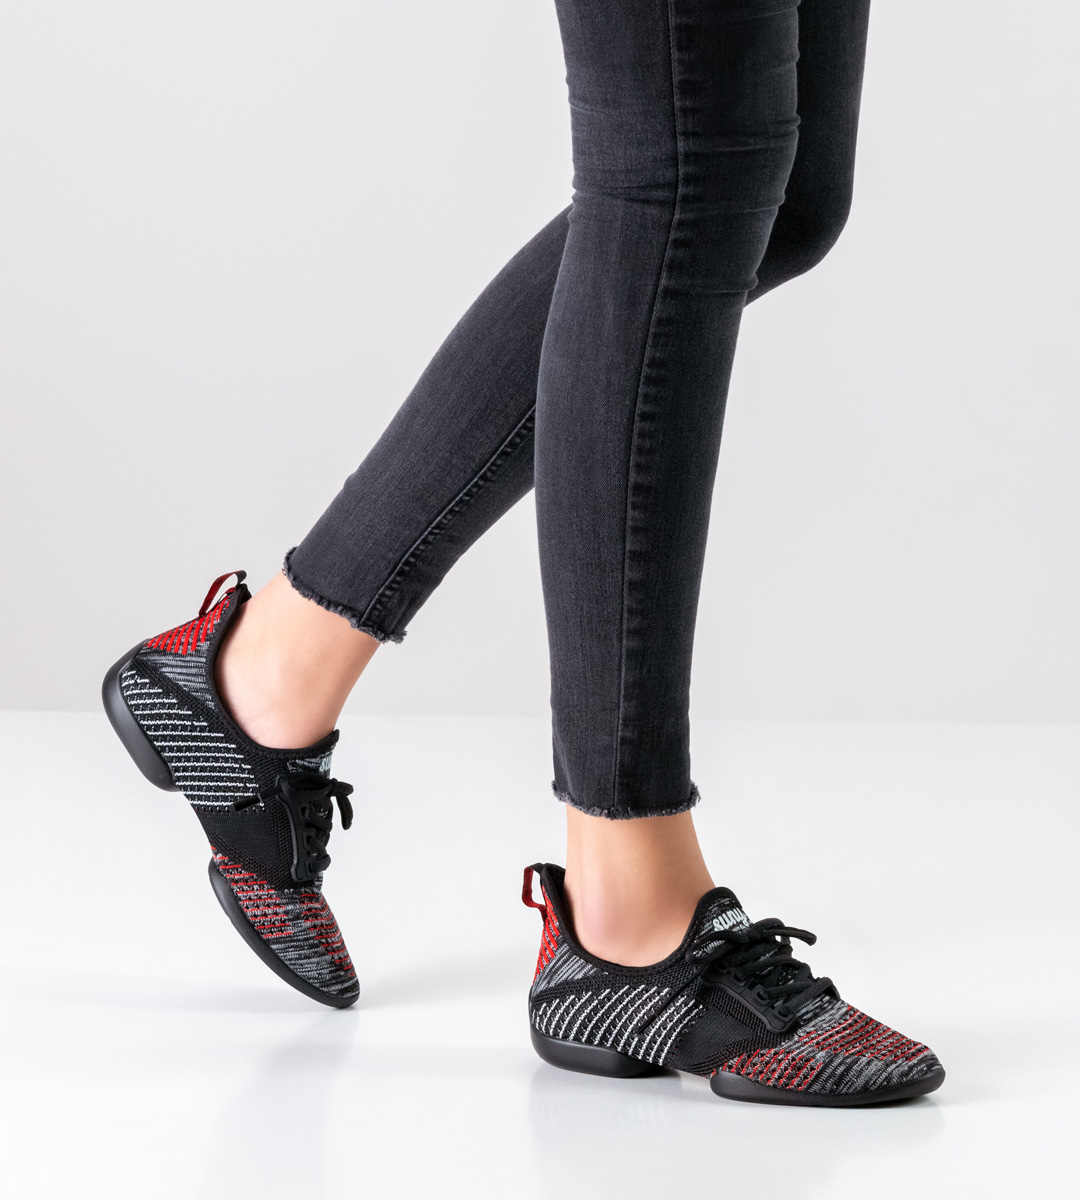 Ladies dance shoe sneaker in black-red-white-grey by Suny